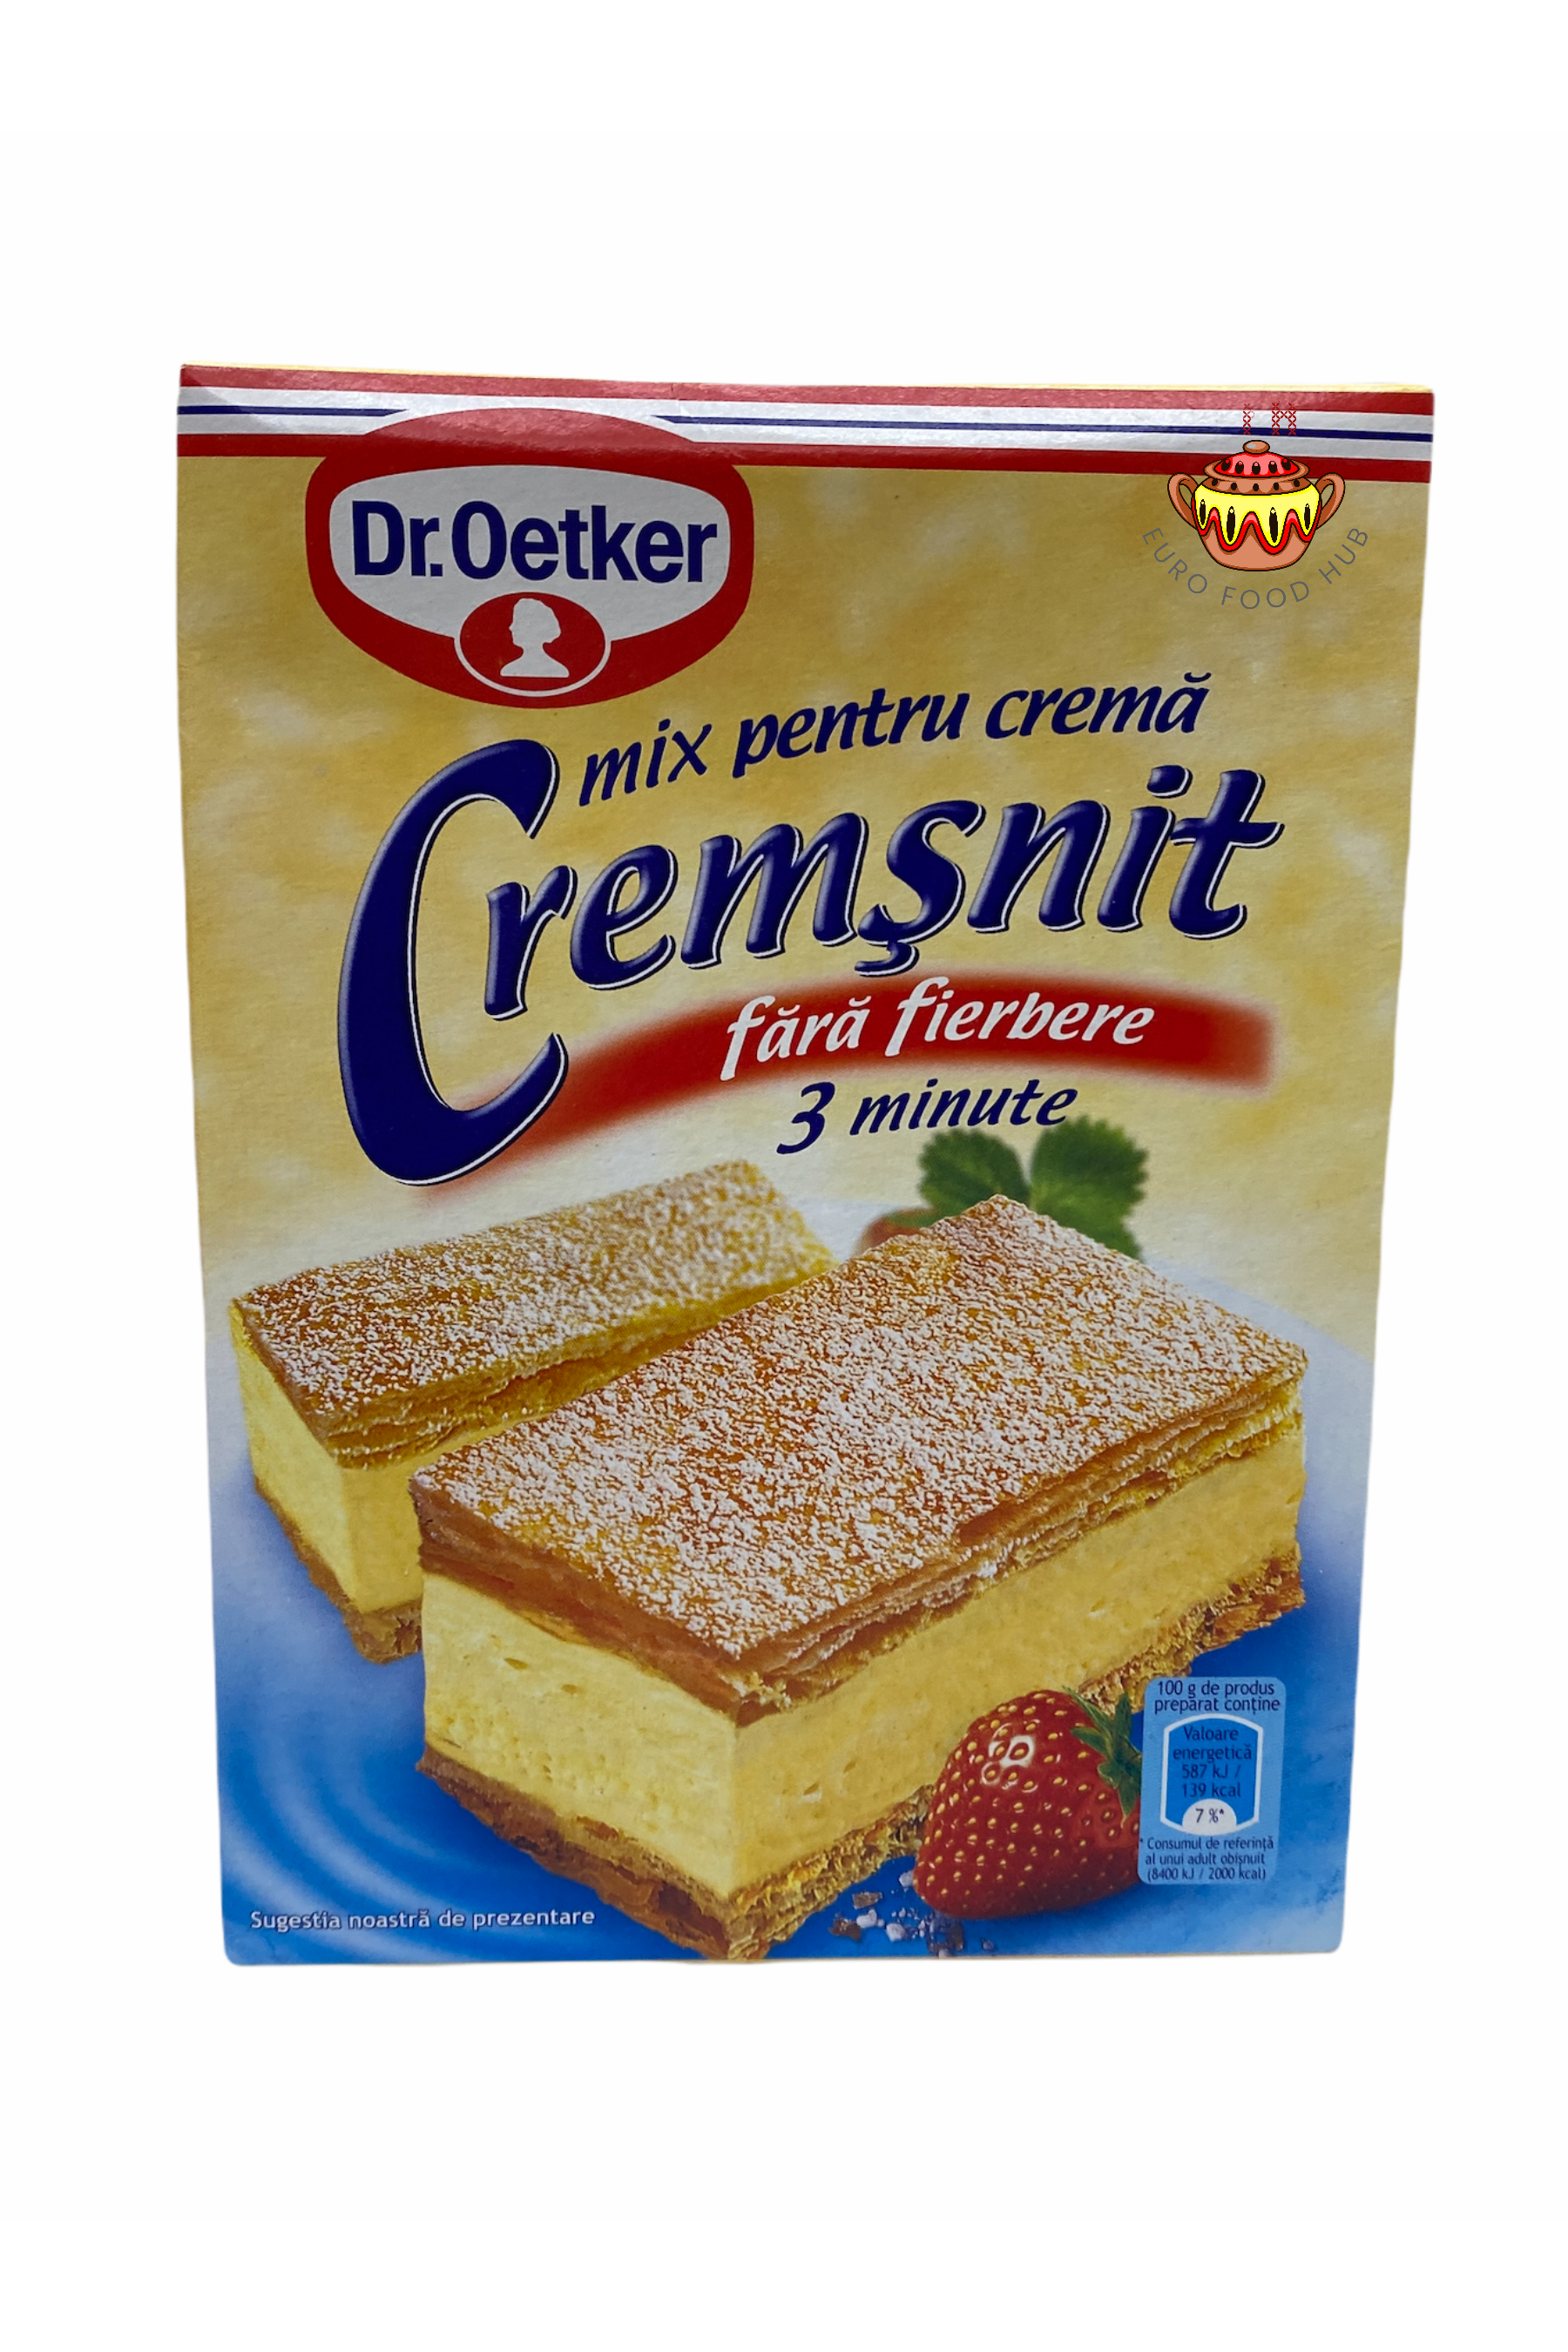 Dr. Oetker - Romanian Cream - Cremsnit